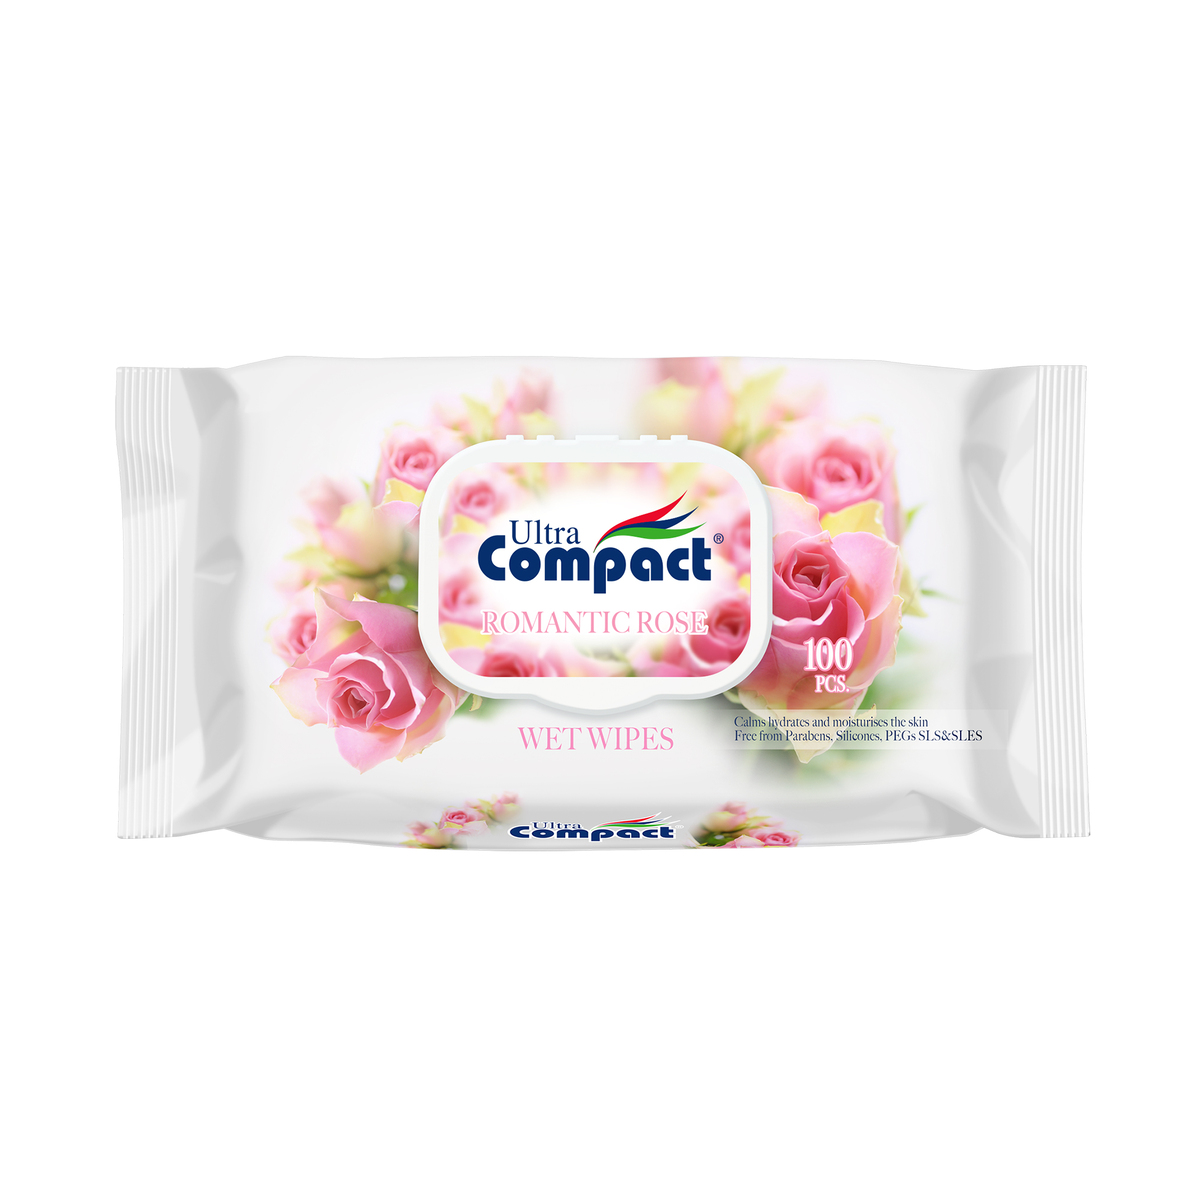 Ultra compact Wet Wipe Romantic Rose 100pcs